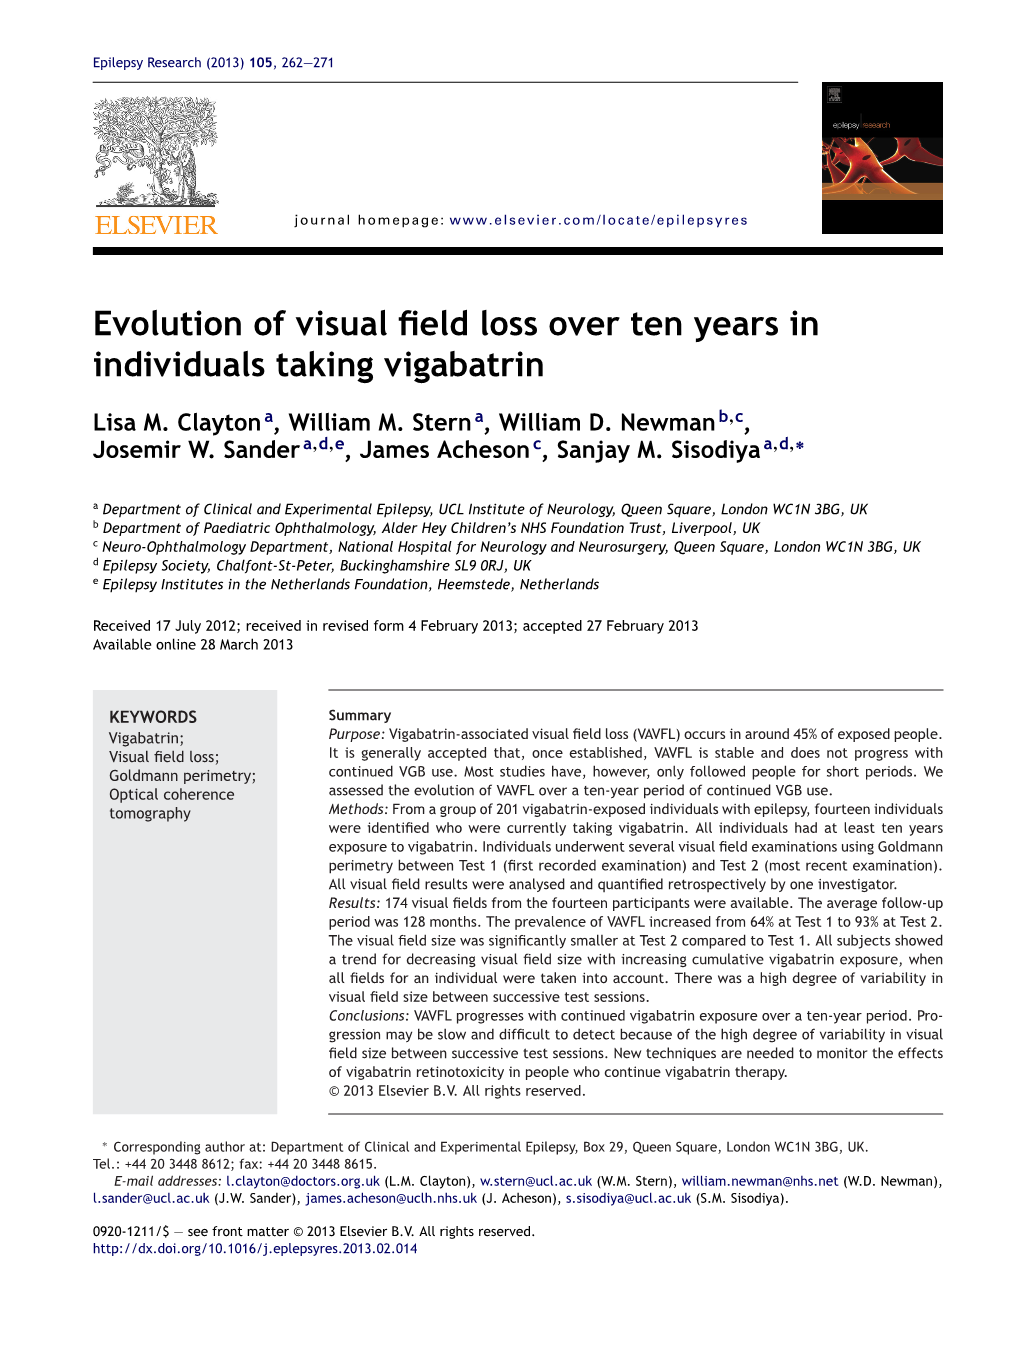 Evolution of Visual Field Loss Over Ten Years in Individuals Taking Vigabatrin